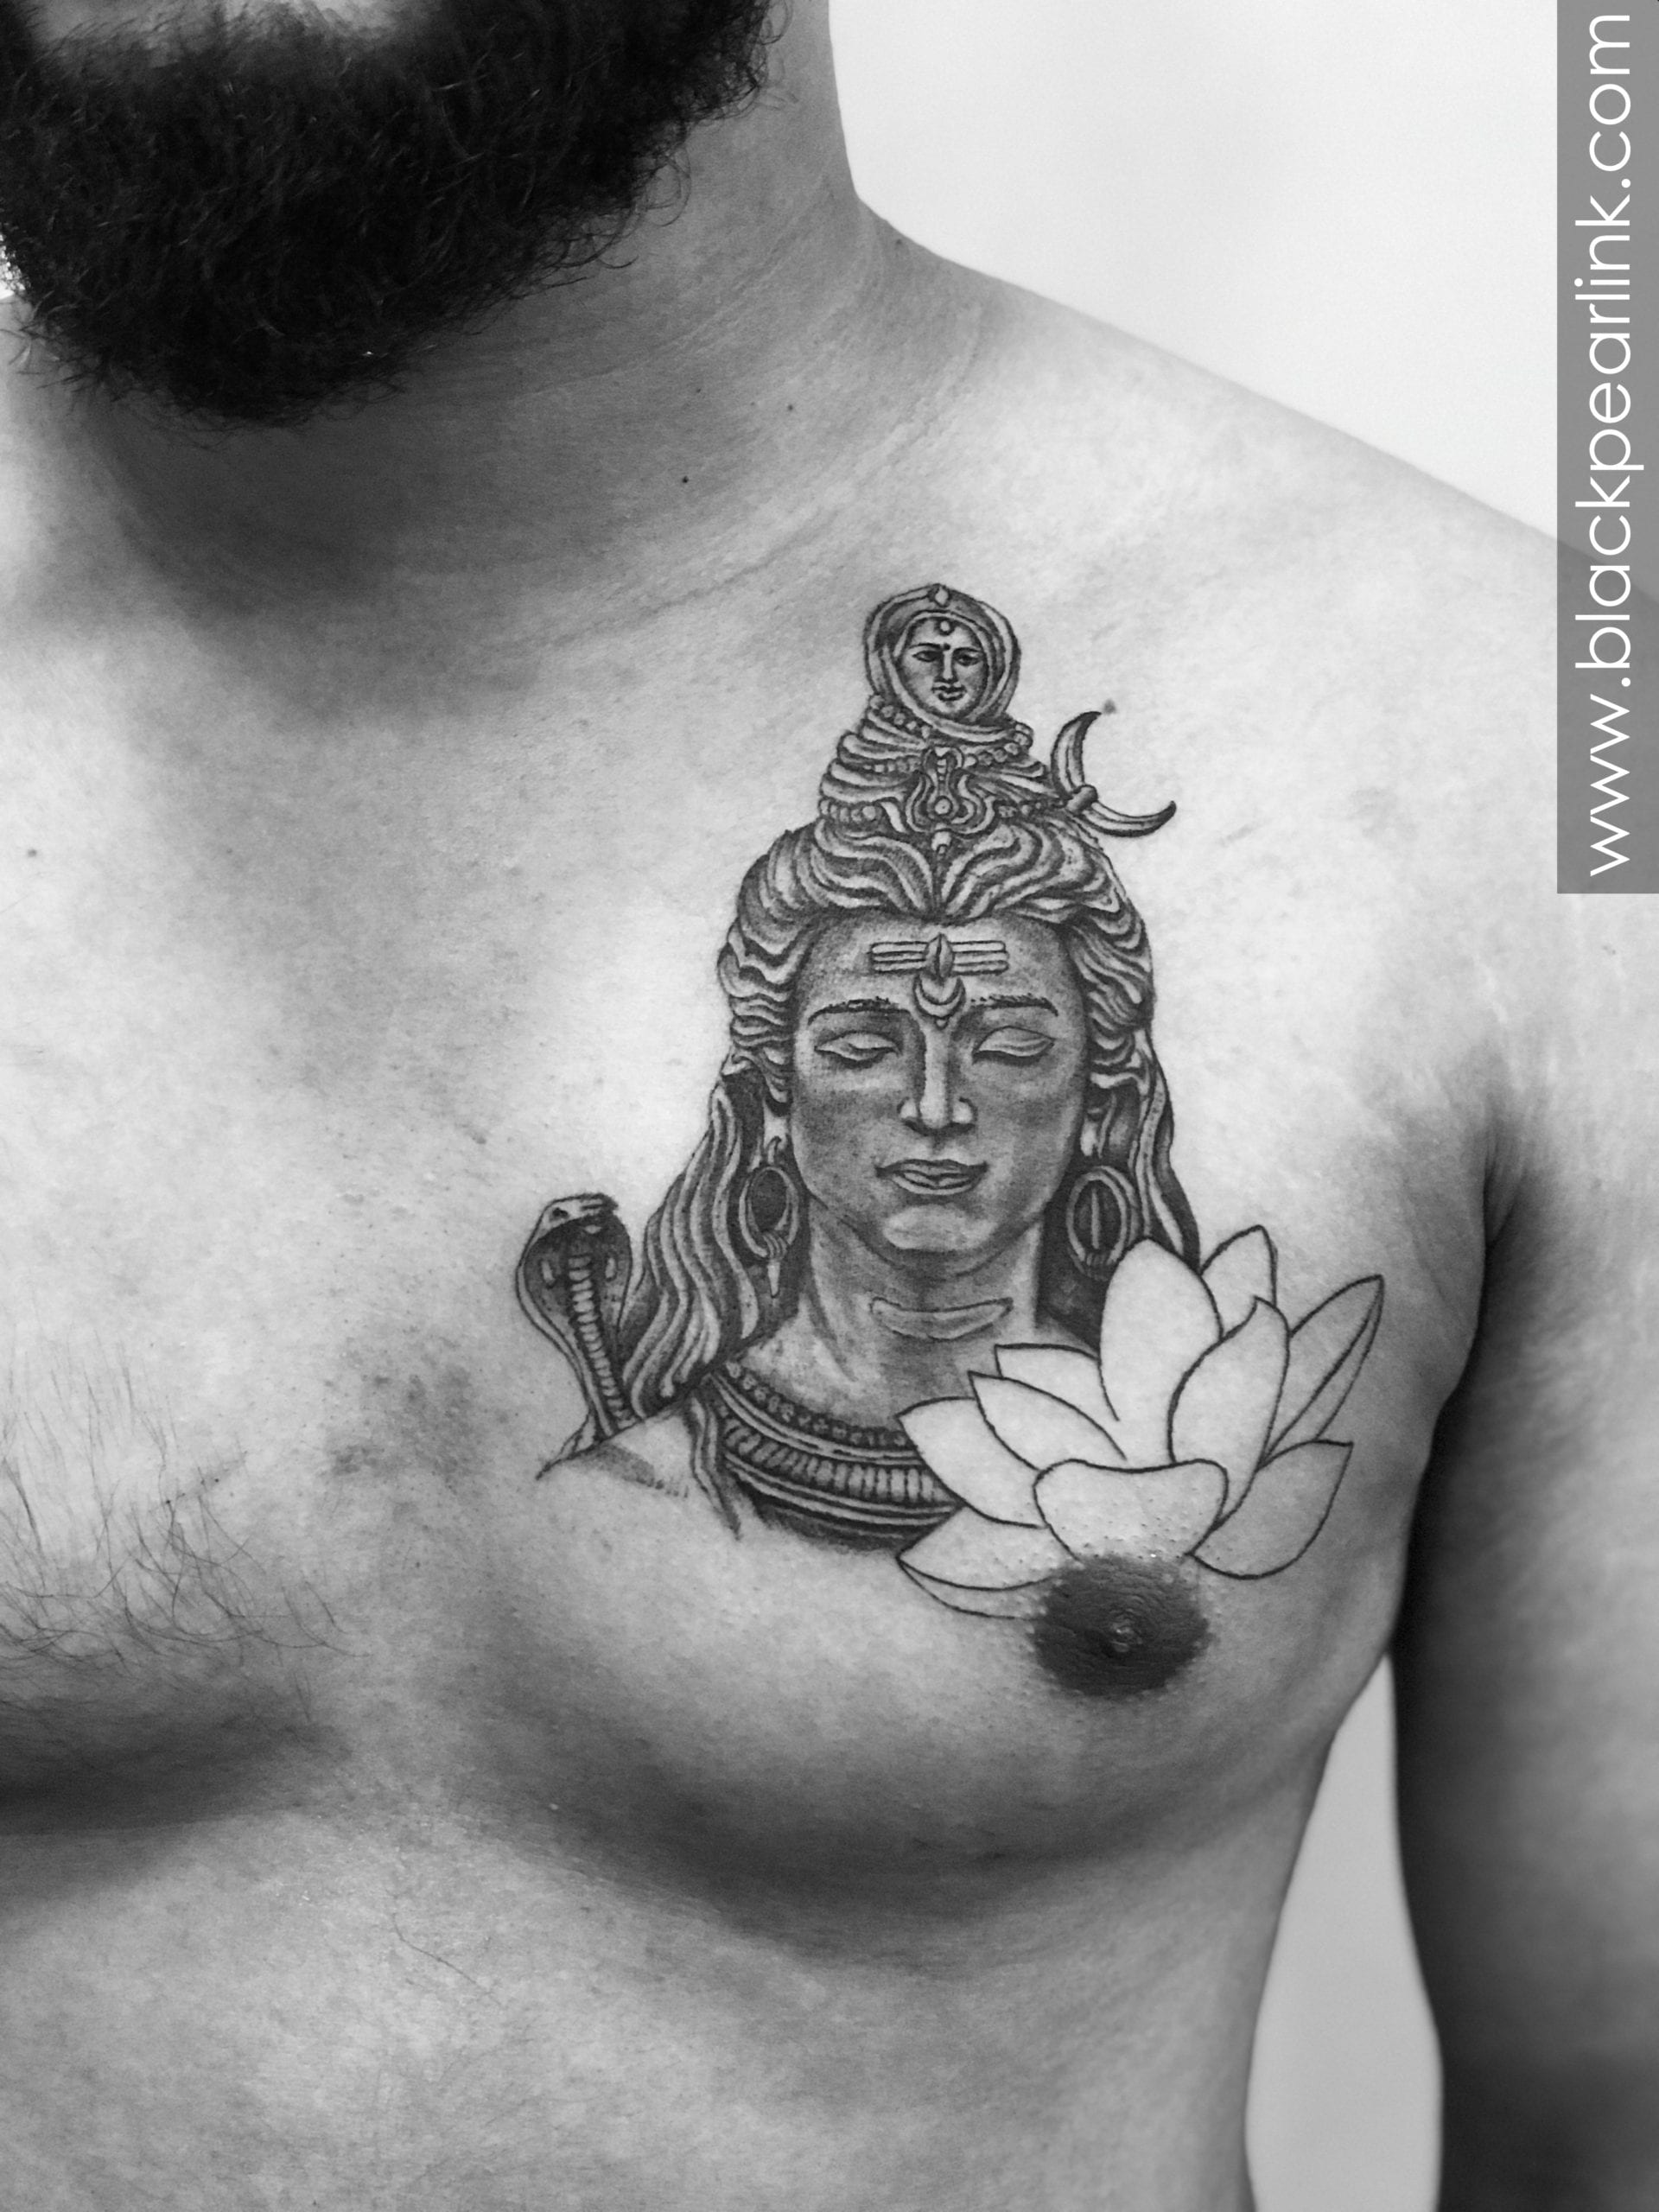 Arcturians Tattoo Studio - Rudra aksh Contact for tattooing  9567991944📲📞📲☎️☺️#rudraksh #shiva ##god #trishul #back #neck #tattoos  #colorful #blue #om #arcturianstattoo @arcturianstattoo | Facebook